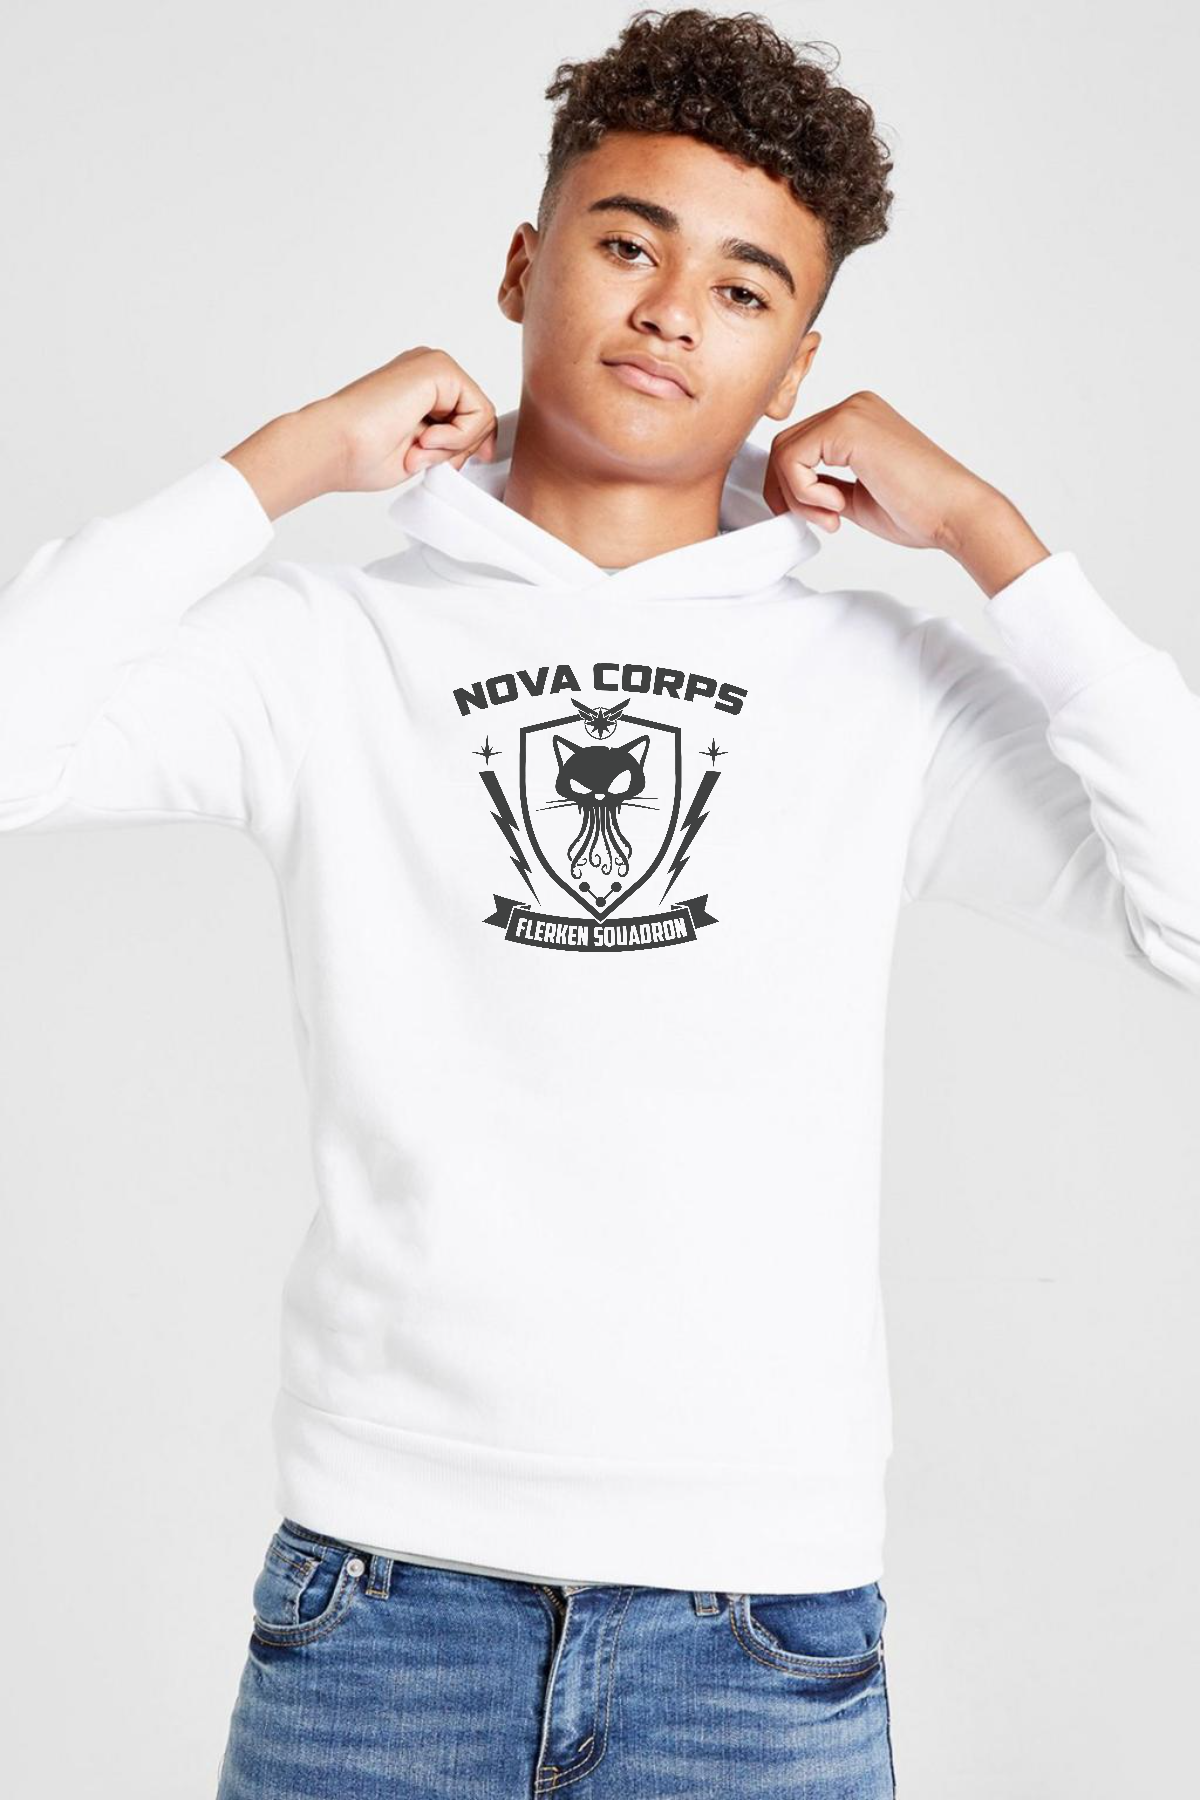 Nova Corps Flerken Squadron Beyaz Çocuk 3ip Kapşonlu  Sweatshirt